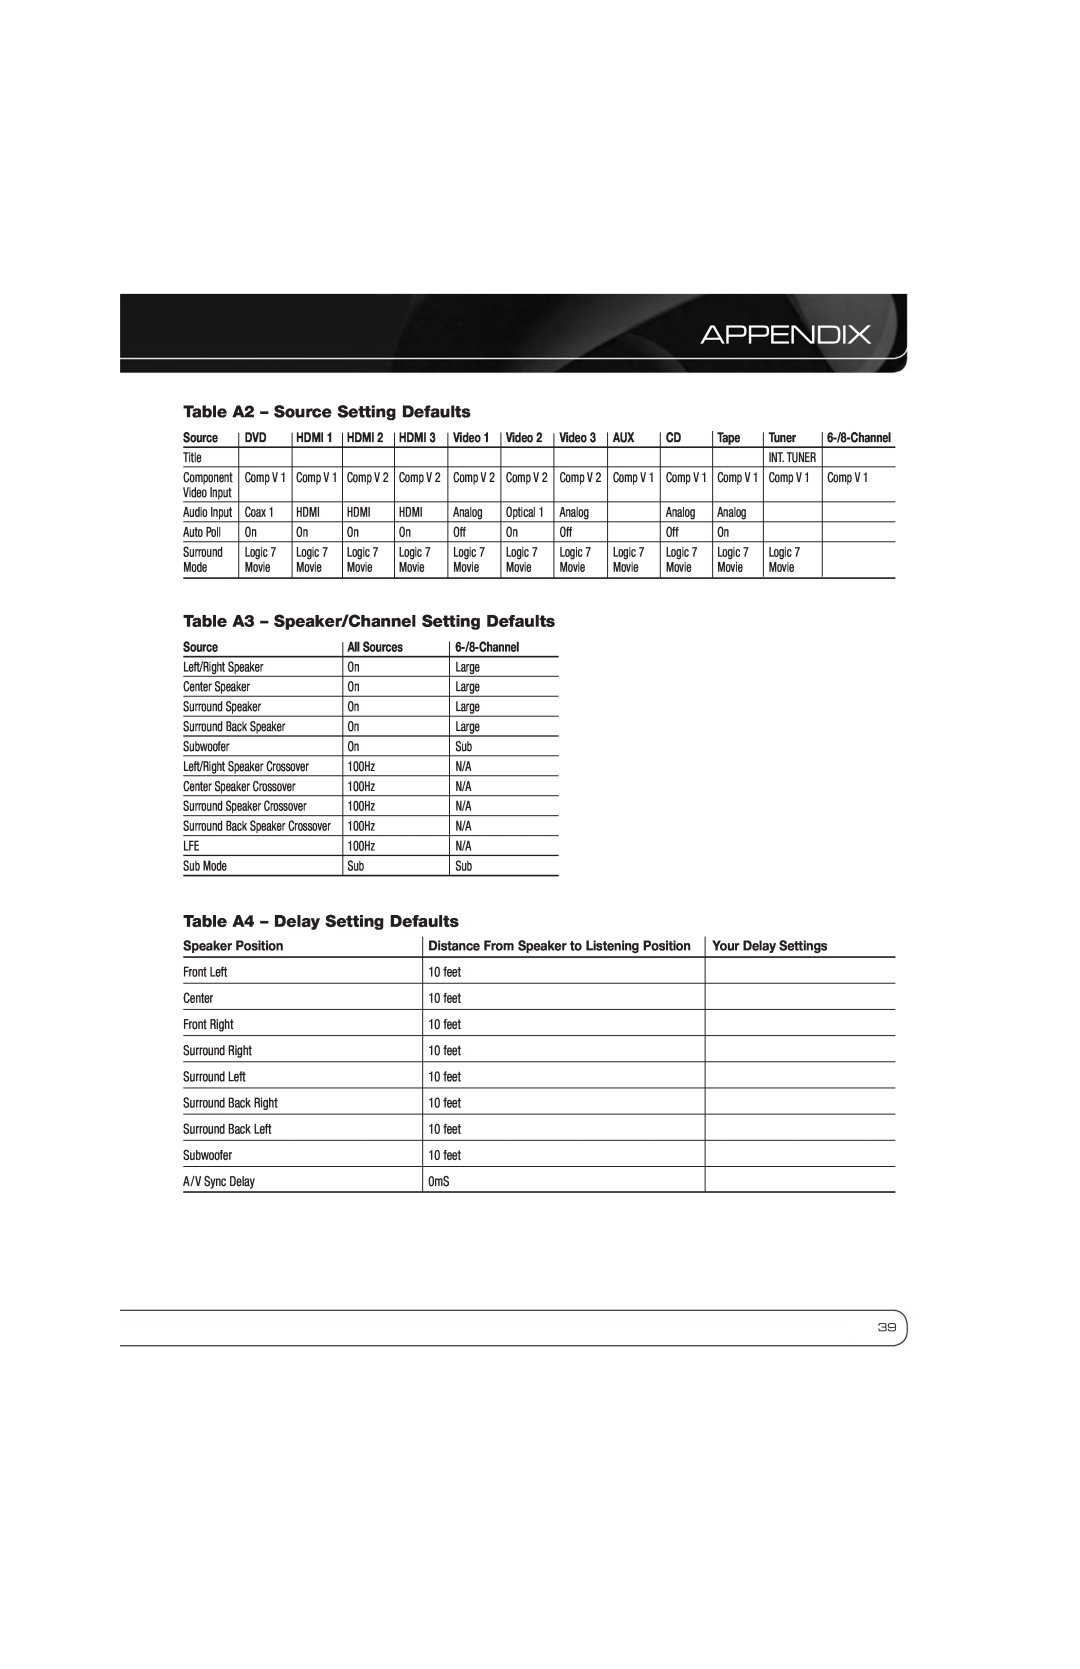 Harman-Kardon AVR 1600 Table A2 - Source Setting Defaults, Table A3 - Speaker/Channel Setting Defaults, Appendix, Hdmi 